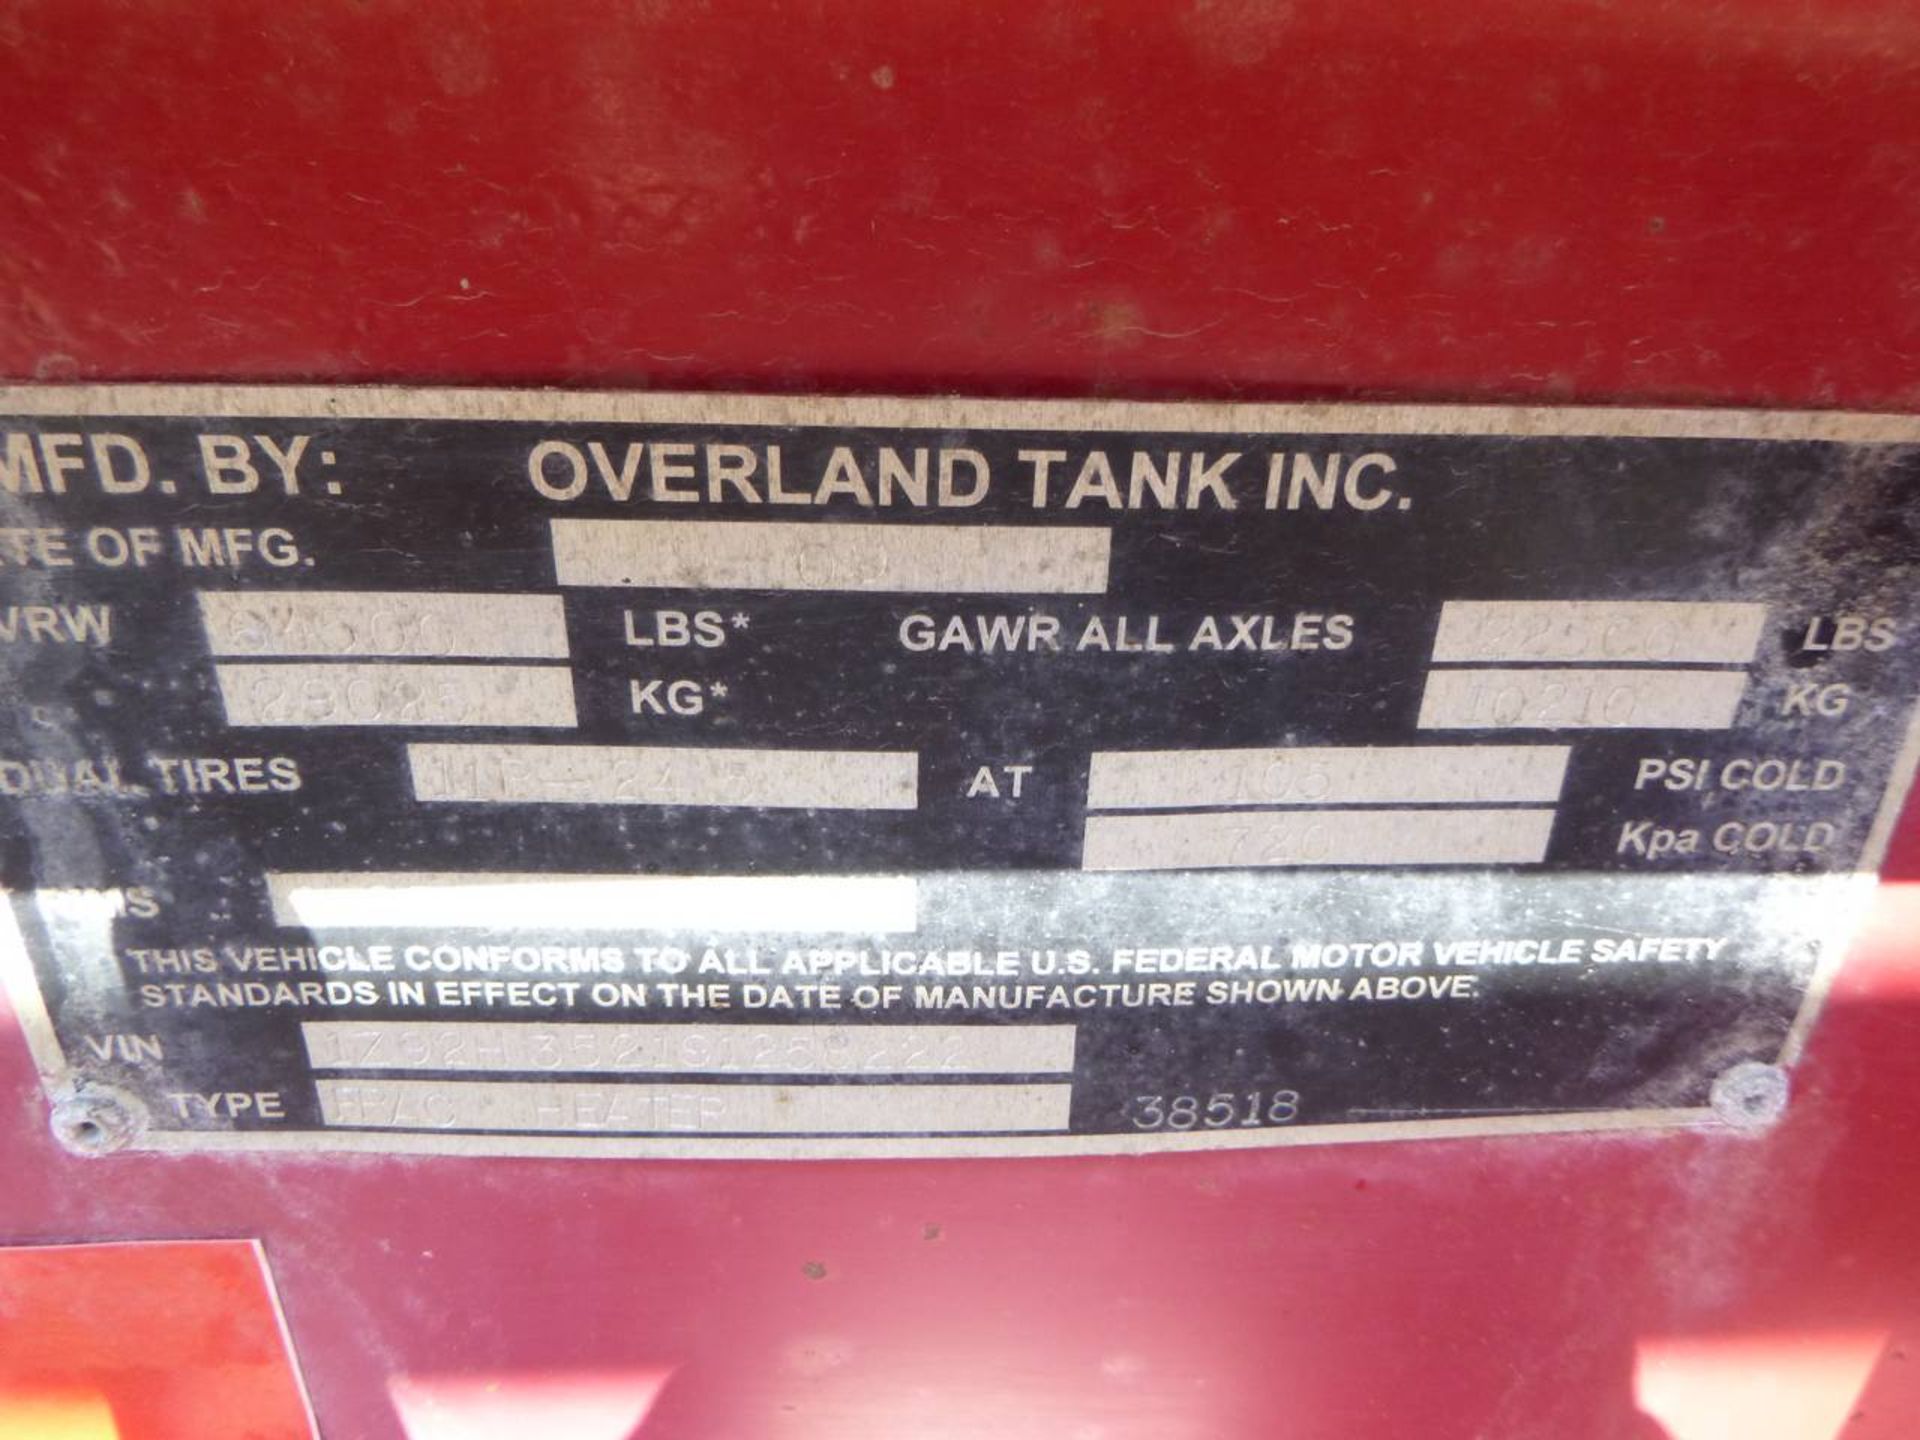 2009 Overland Tank Inc 38518 Frac fluid super heater - Image 5 of 18